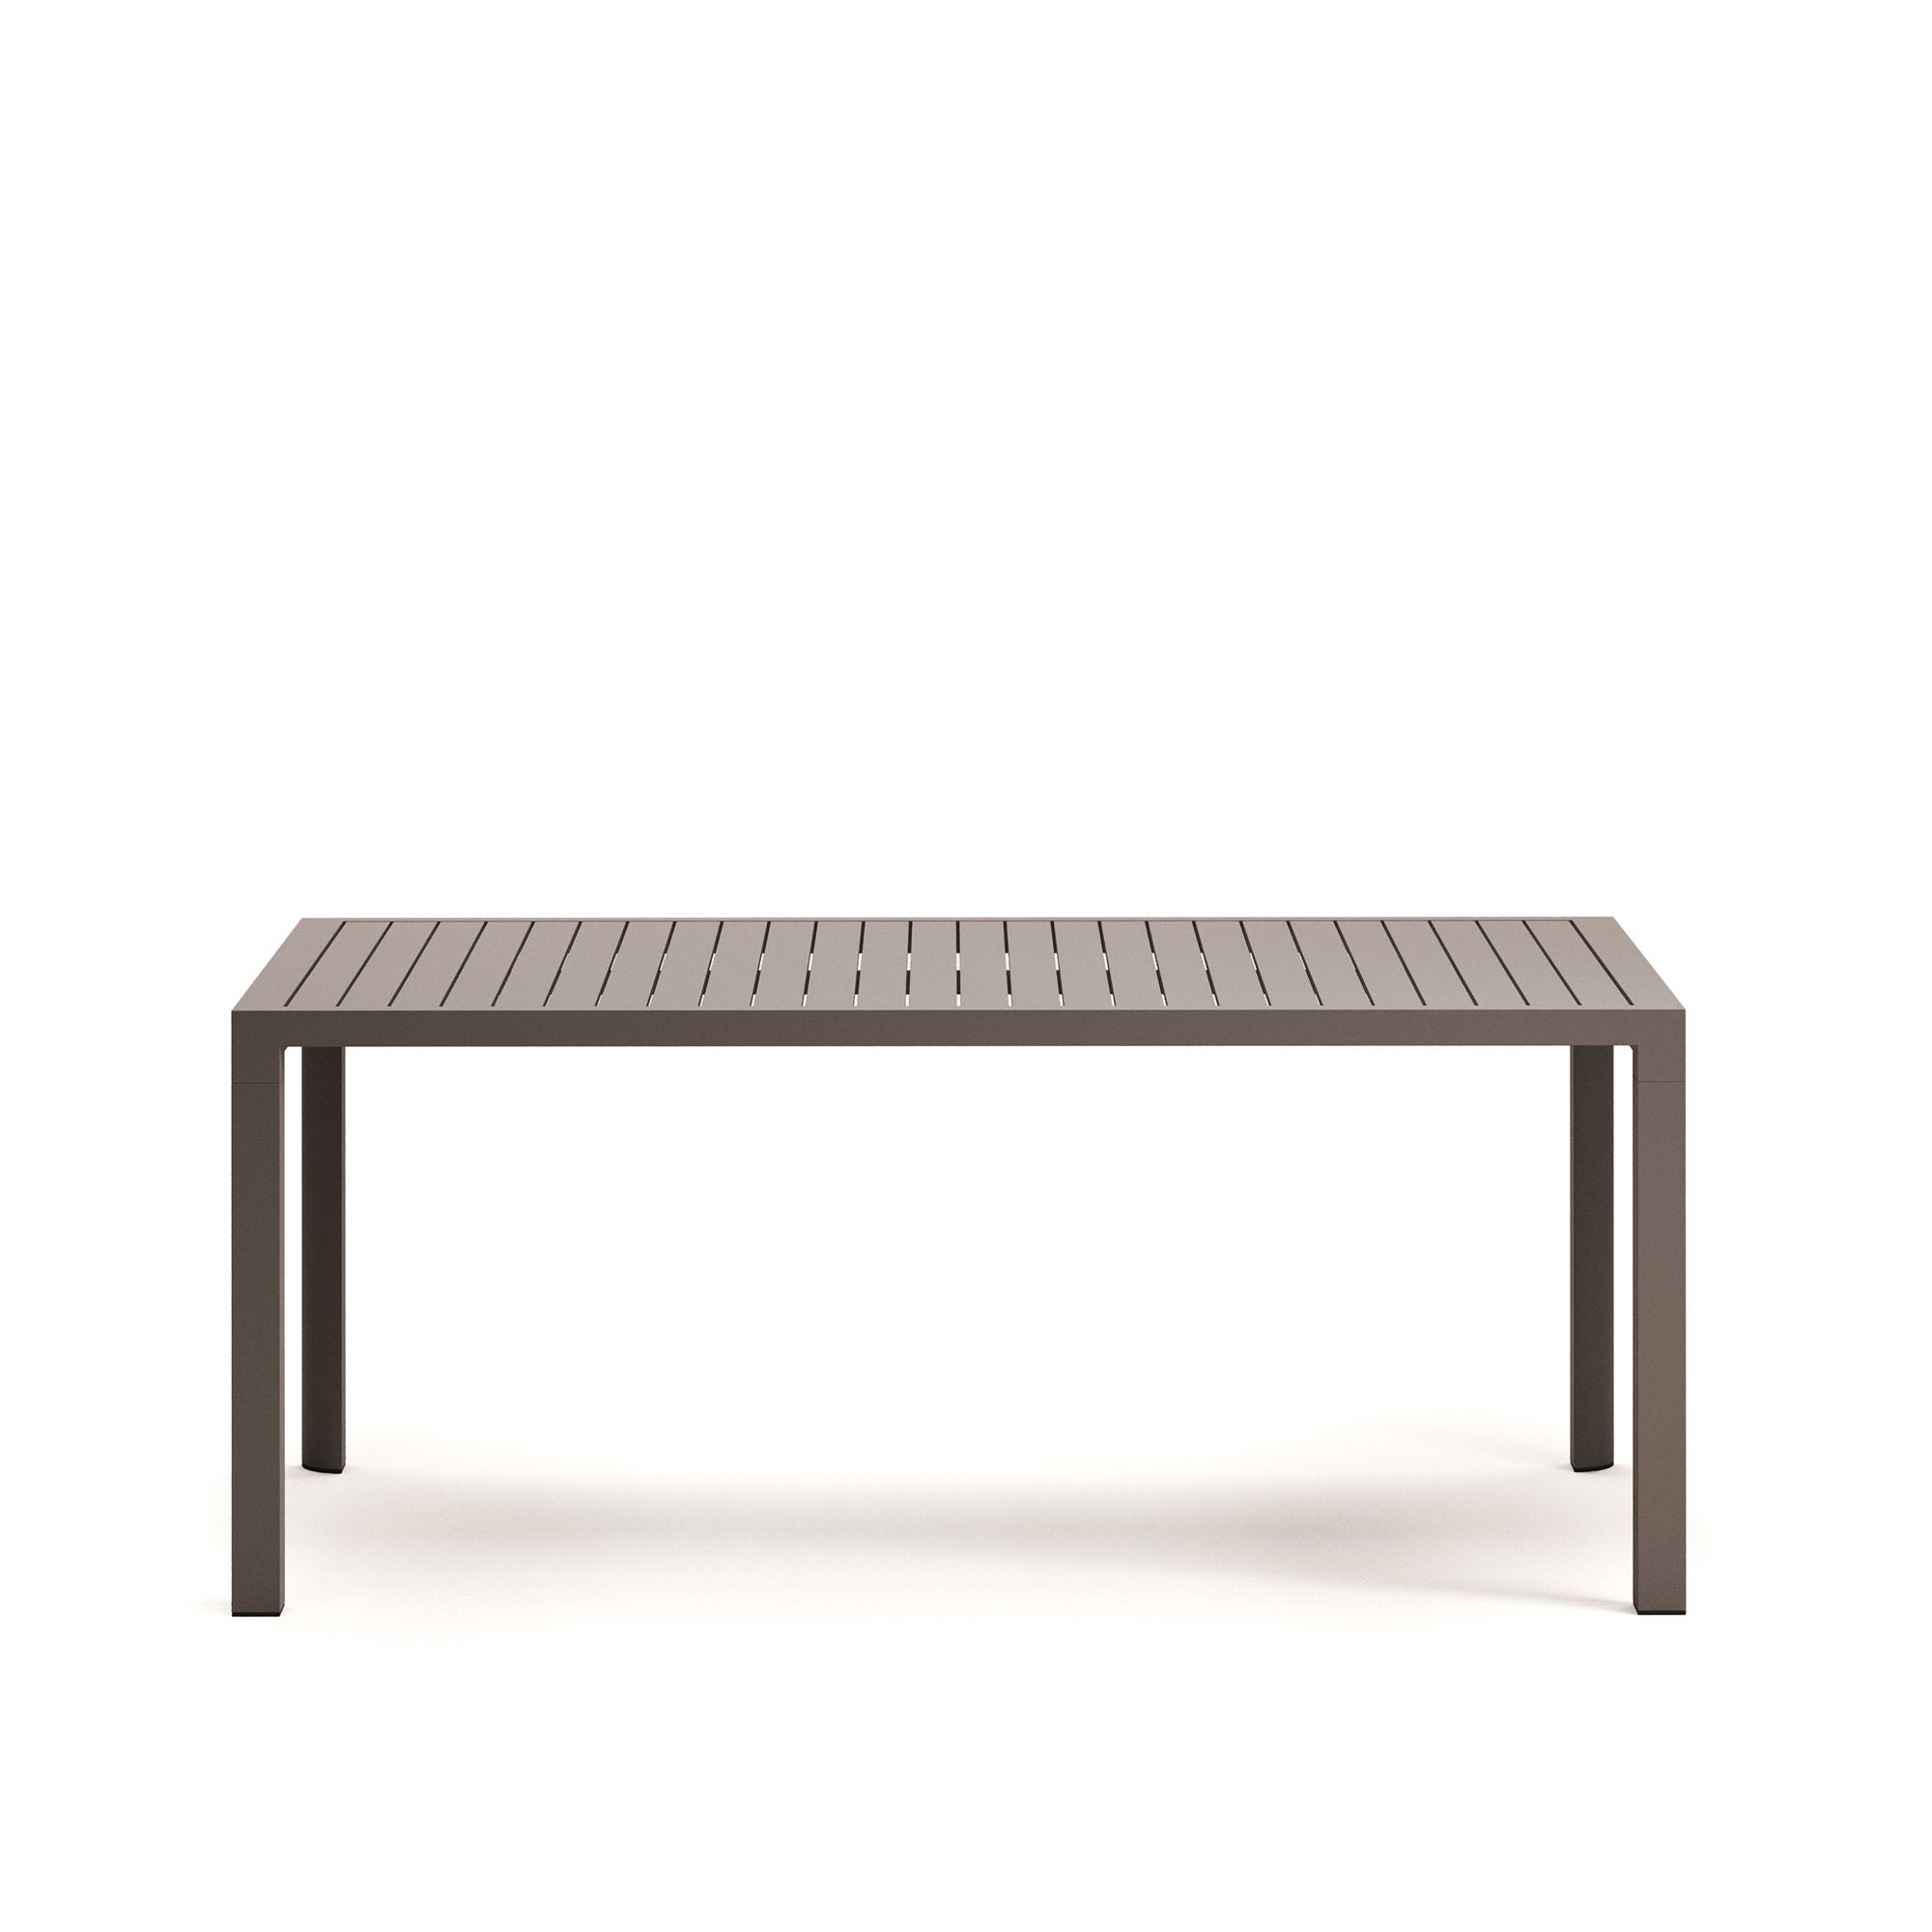 Culip aluminium outdoor table in powder coated brown finish, 180 x 90 cm